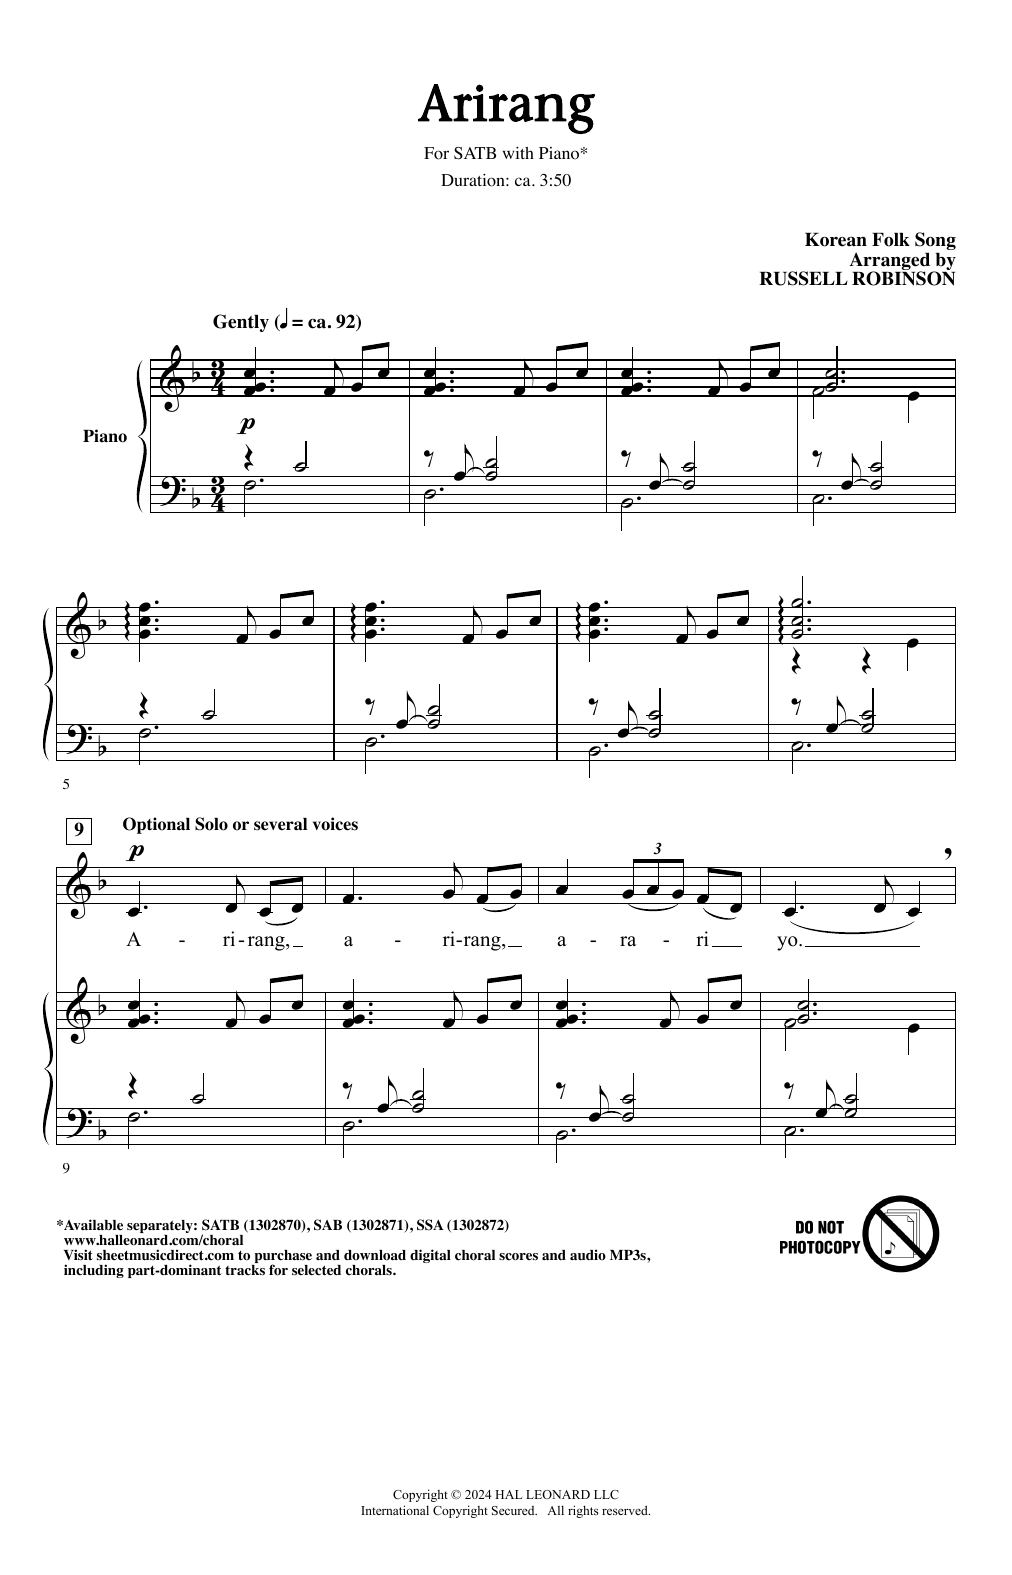 Korean folk song Arirang (arr. Russell Robinson) Sheet Music Notes & Chords for SAB Choir - Download or Print PDF